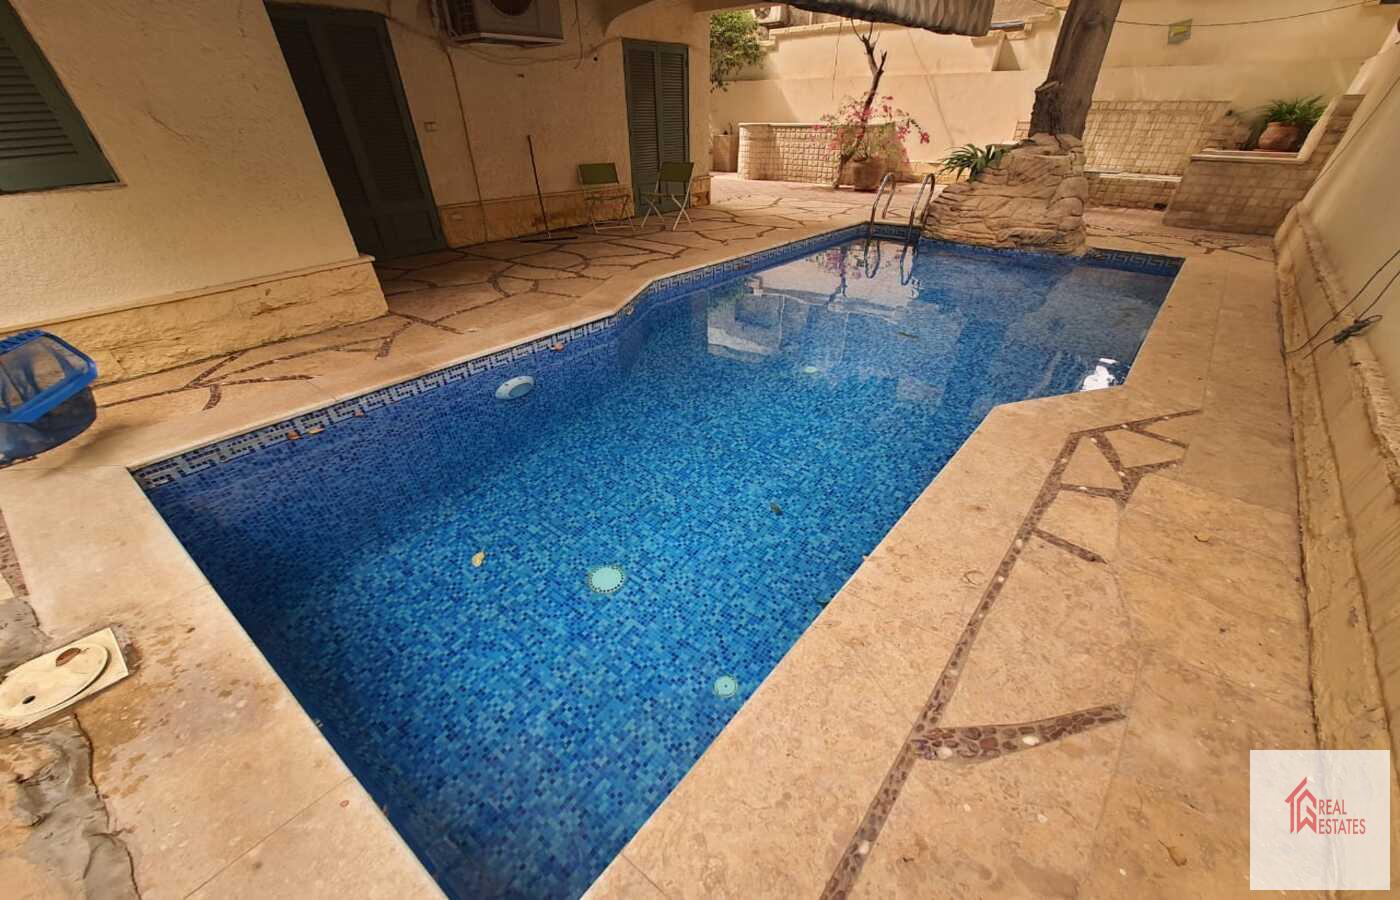 Sarayat El Maadi - Cairo - Egypt에서 임대 가능한 개인 수영장이 있는 1층 주택